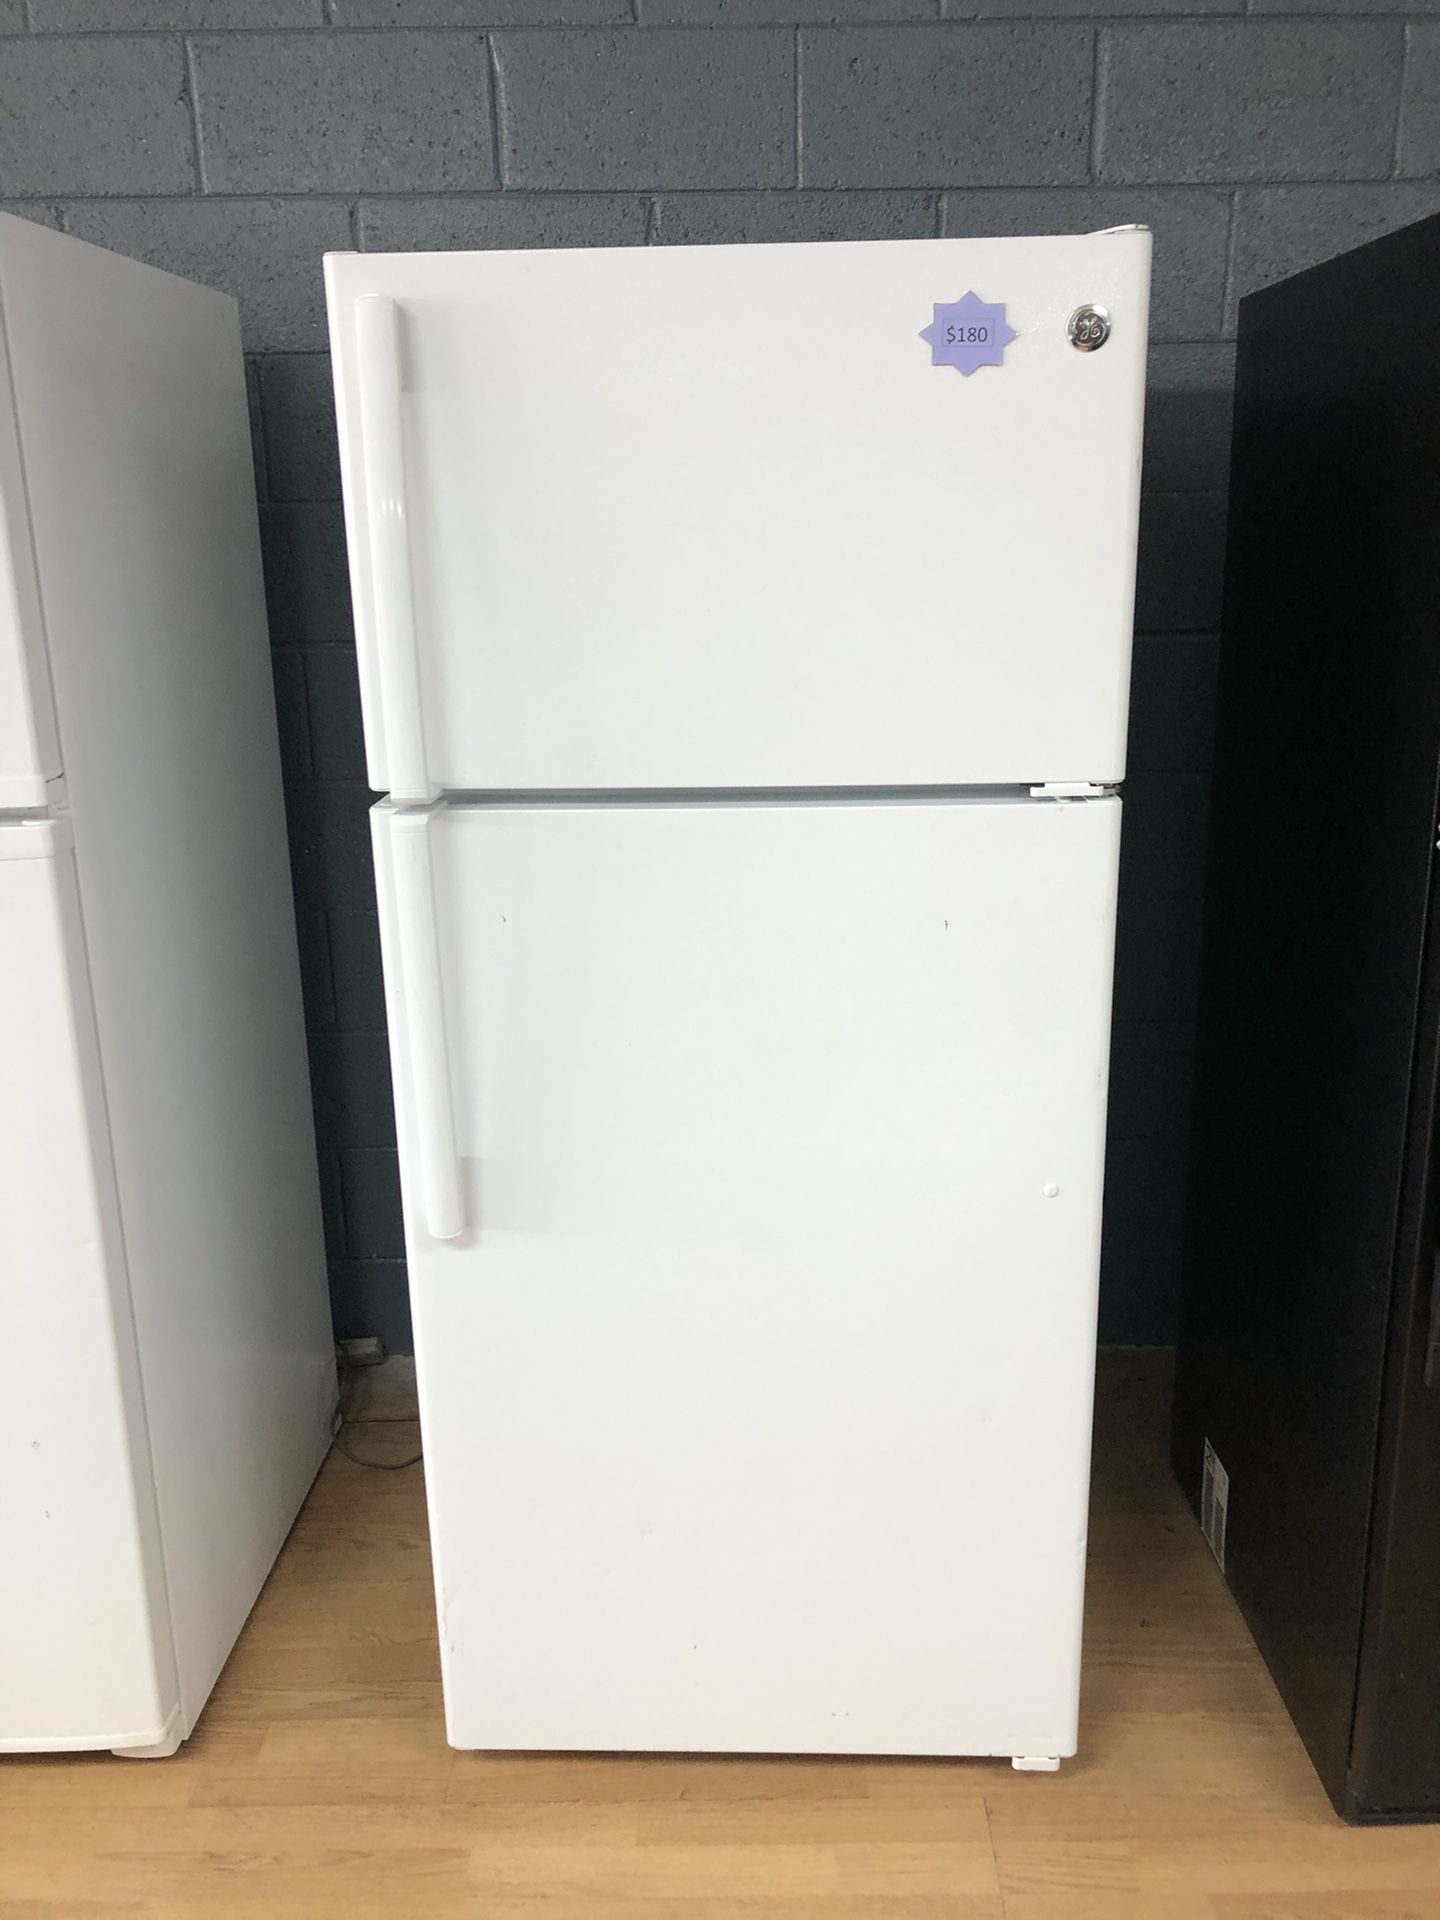 GE white top freezer refrigerator